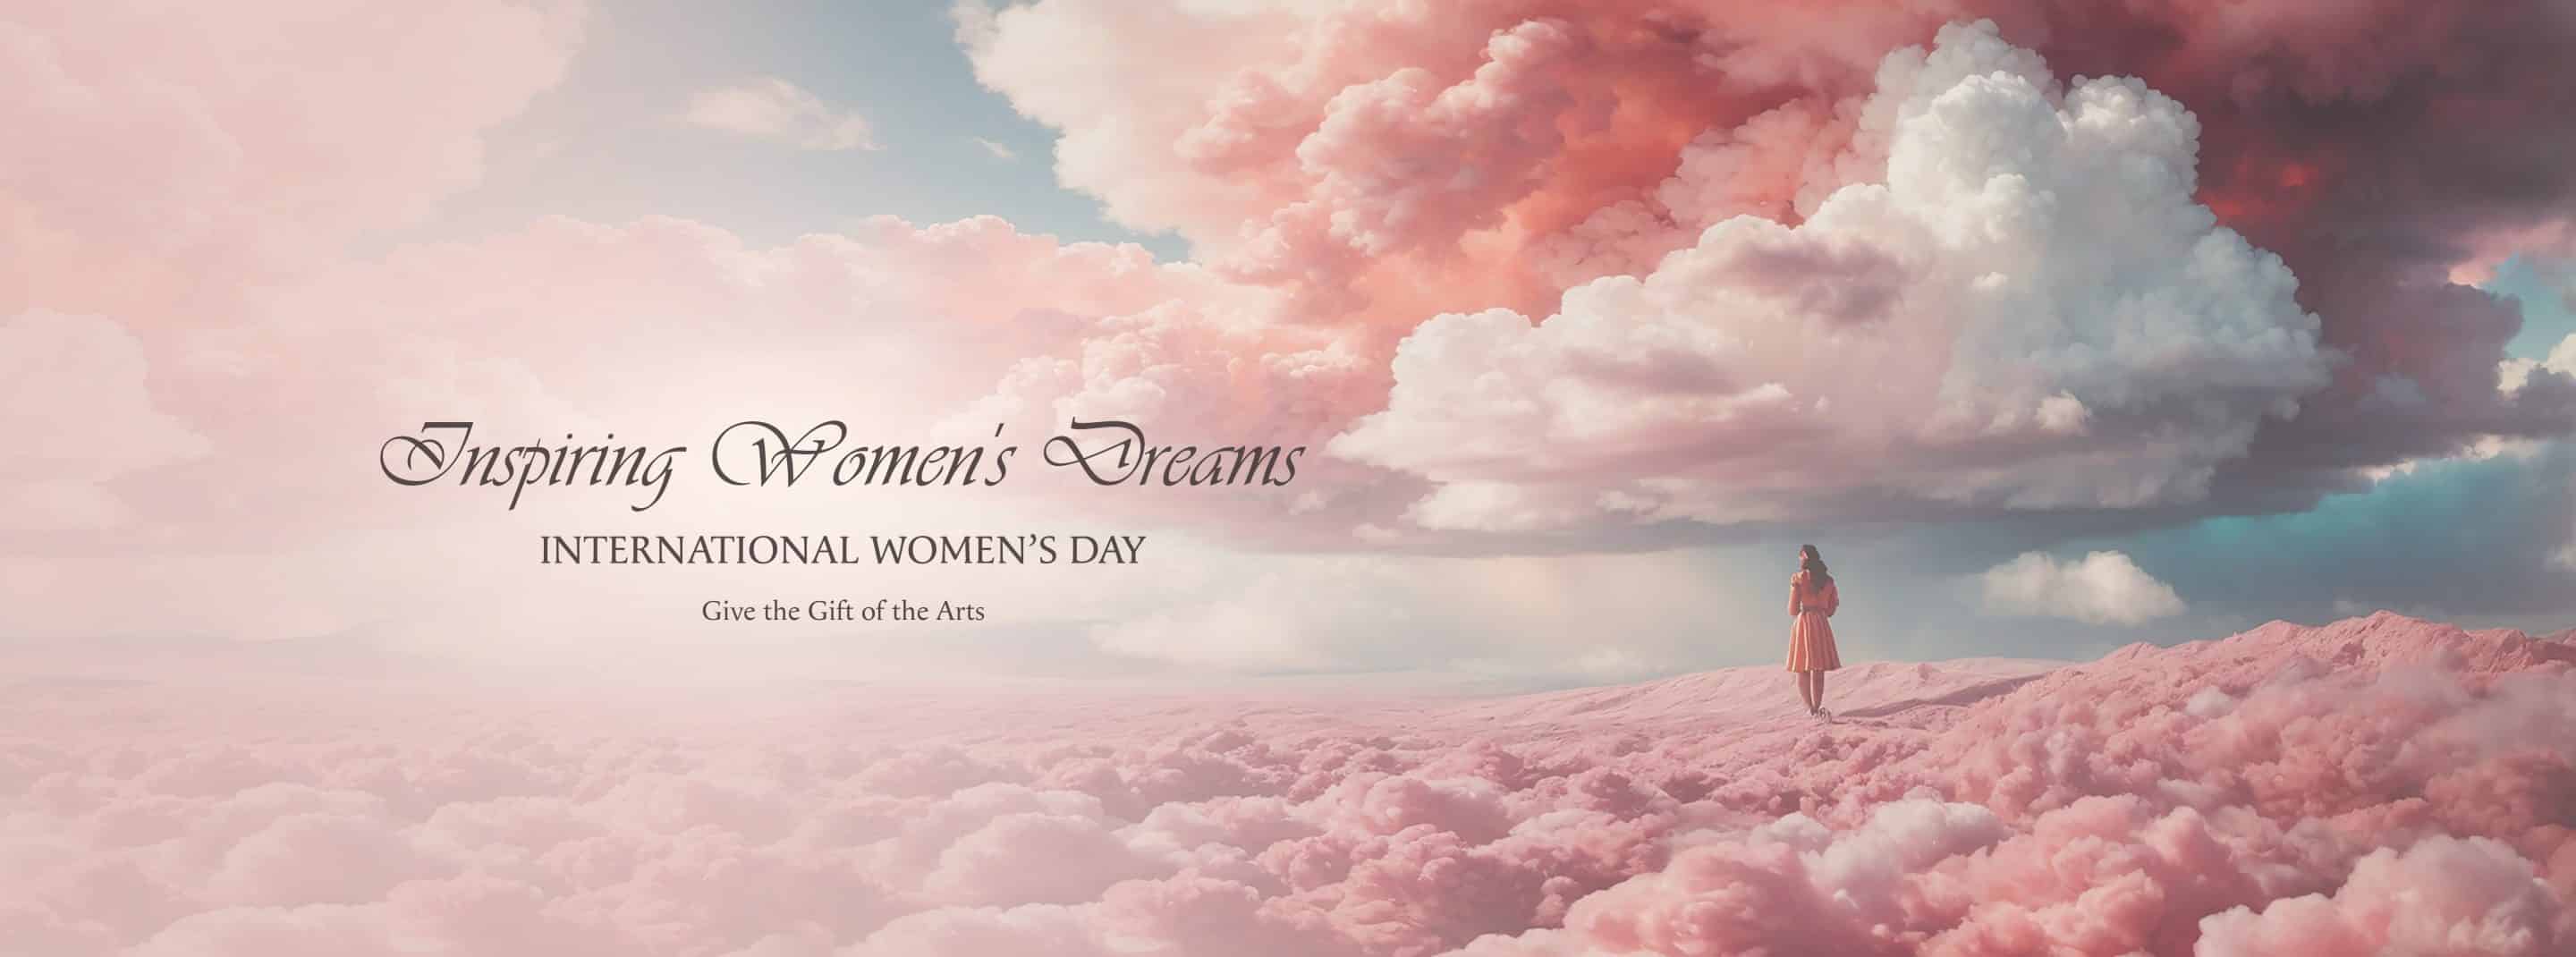 Inspiring women's dreams copy